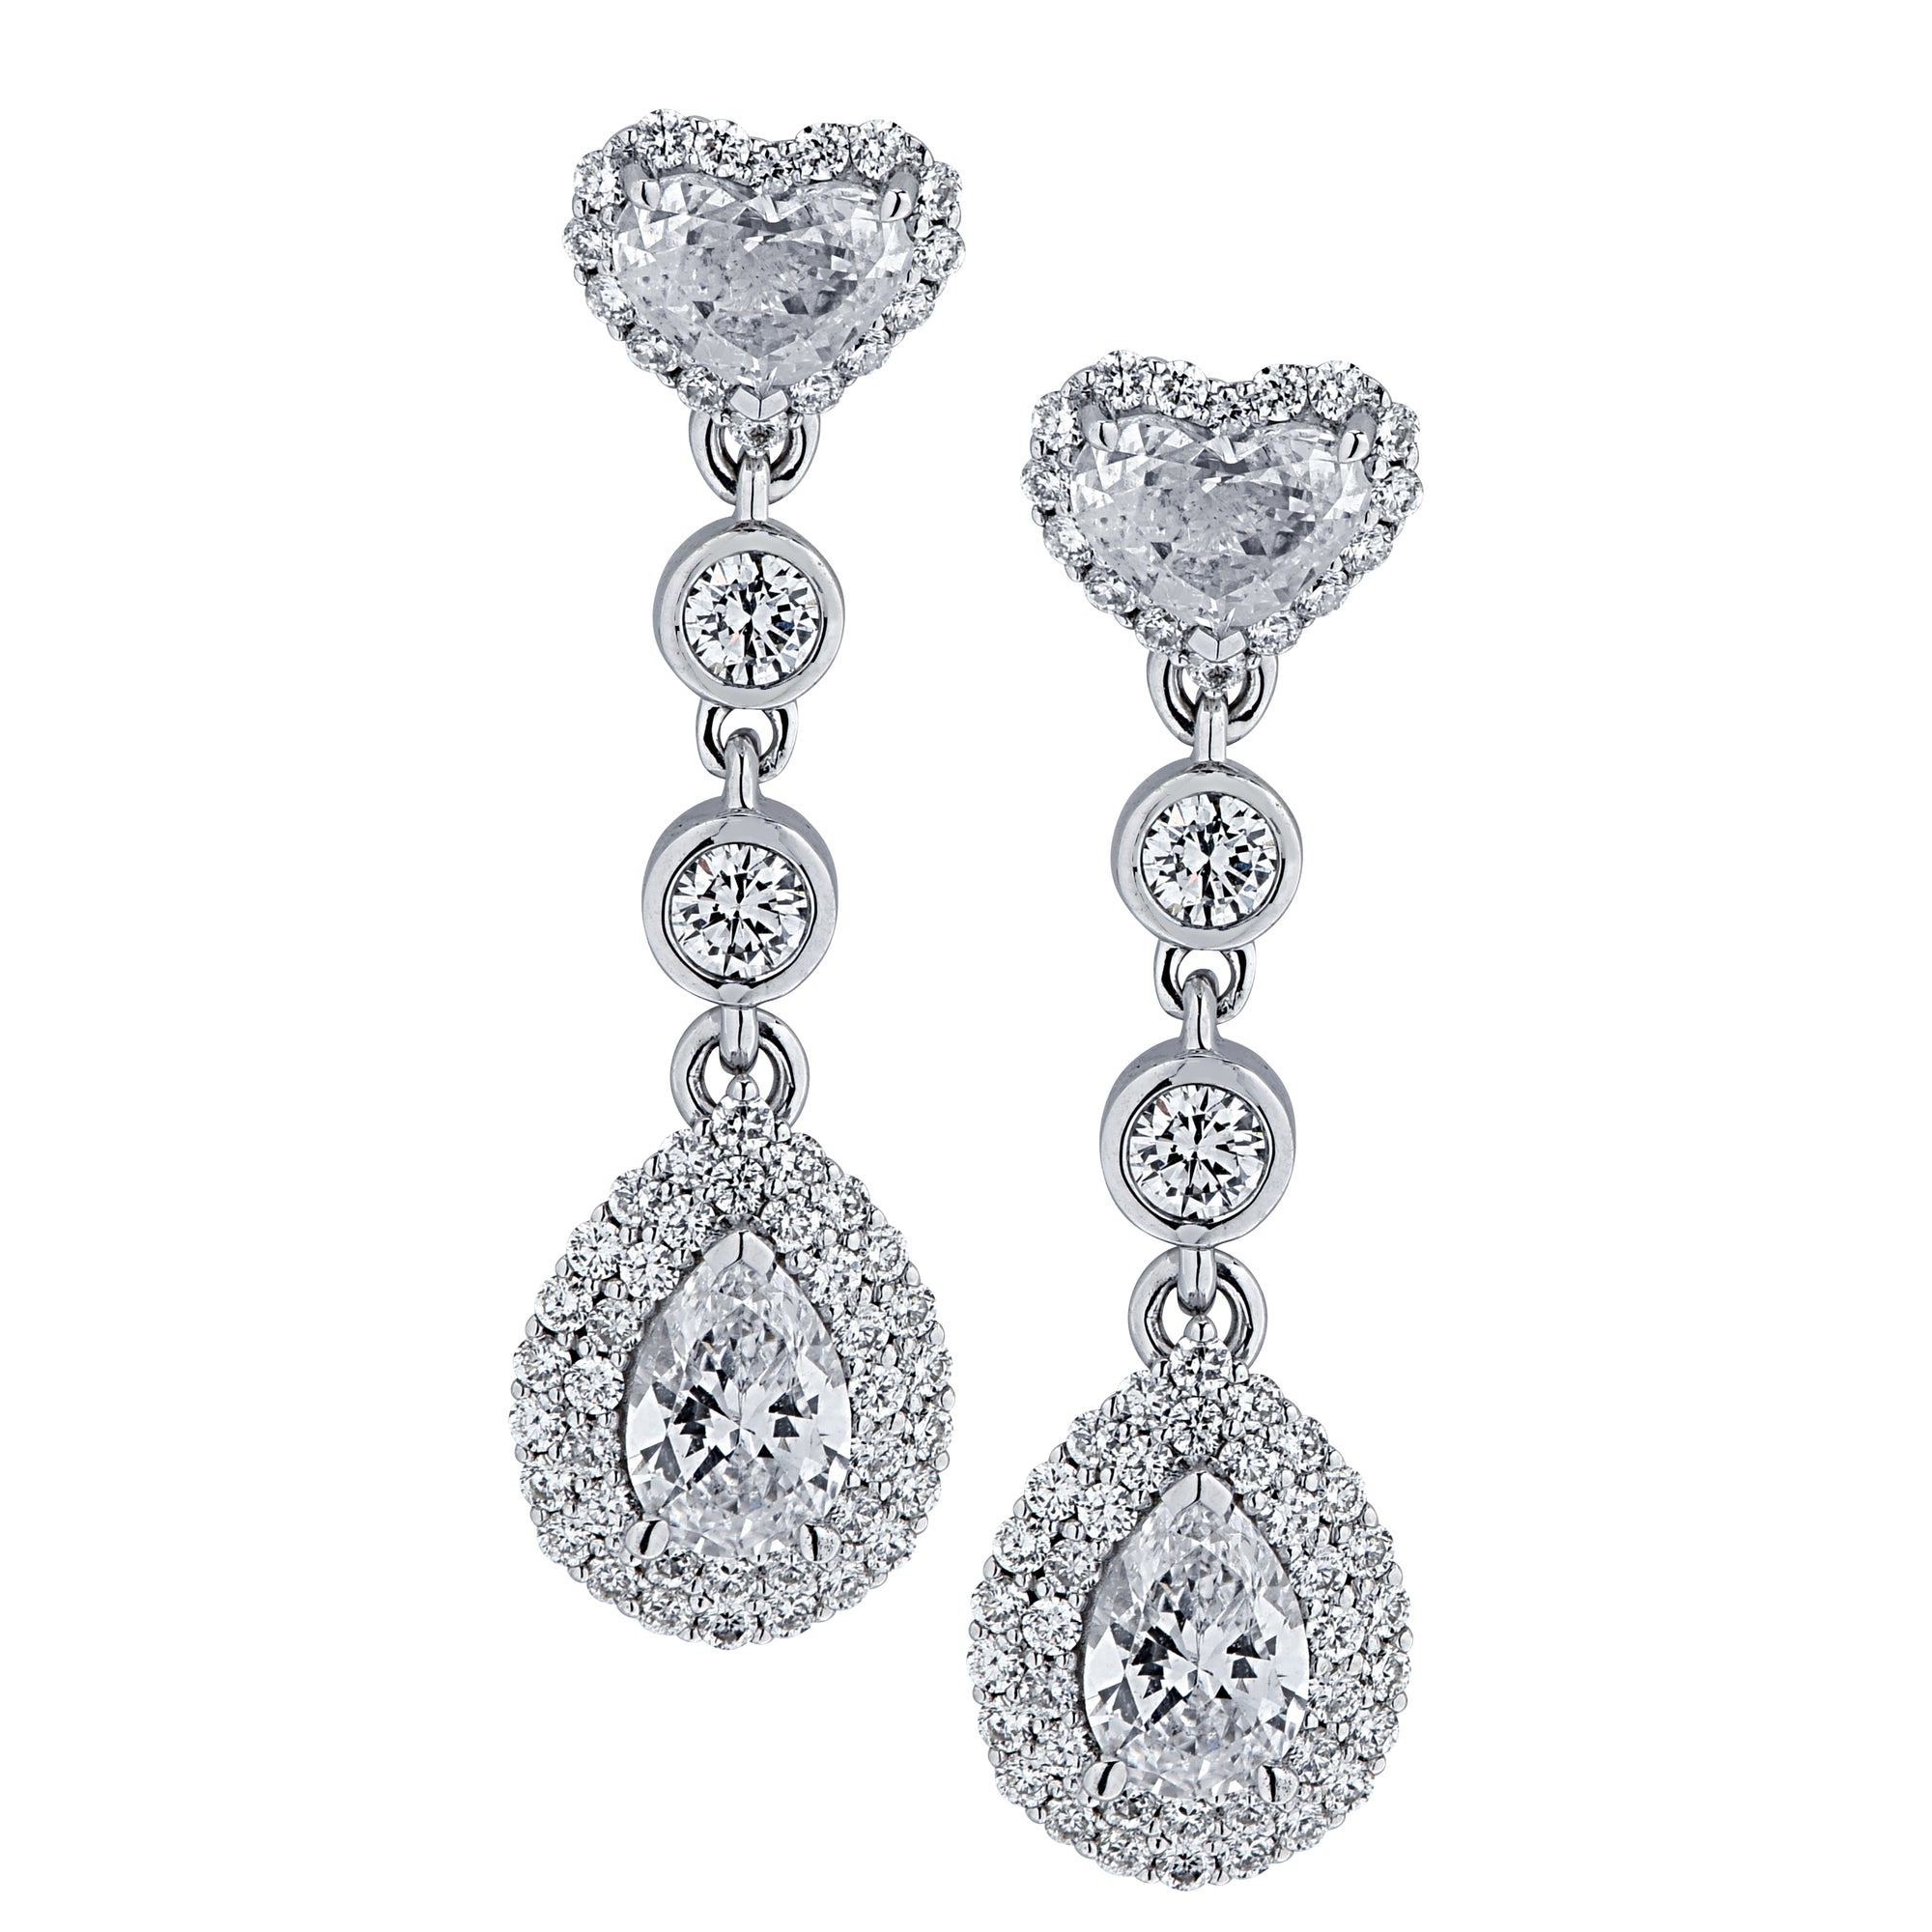 Vivid Diamond 21 Carat Diamond Dangle Chandelier Earrings -V39300 